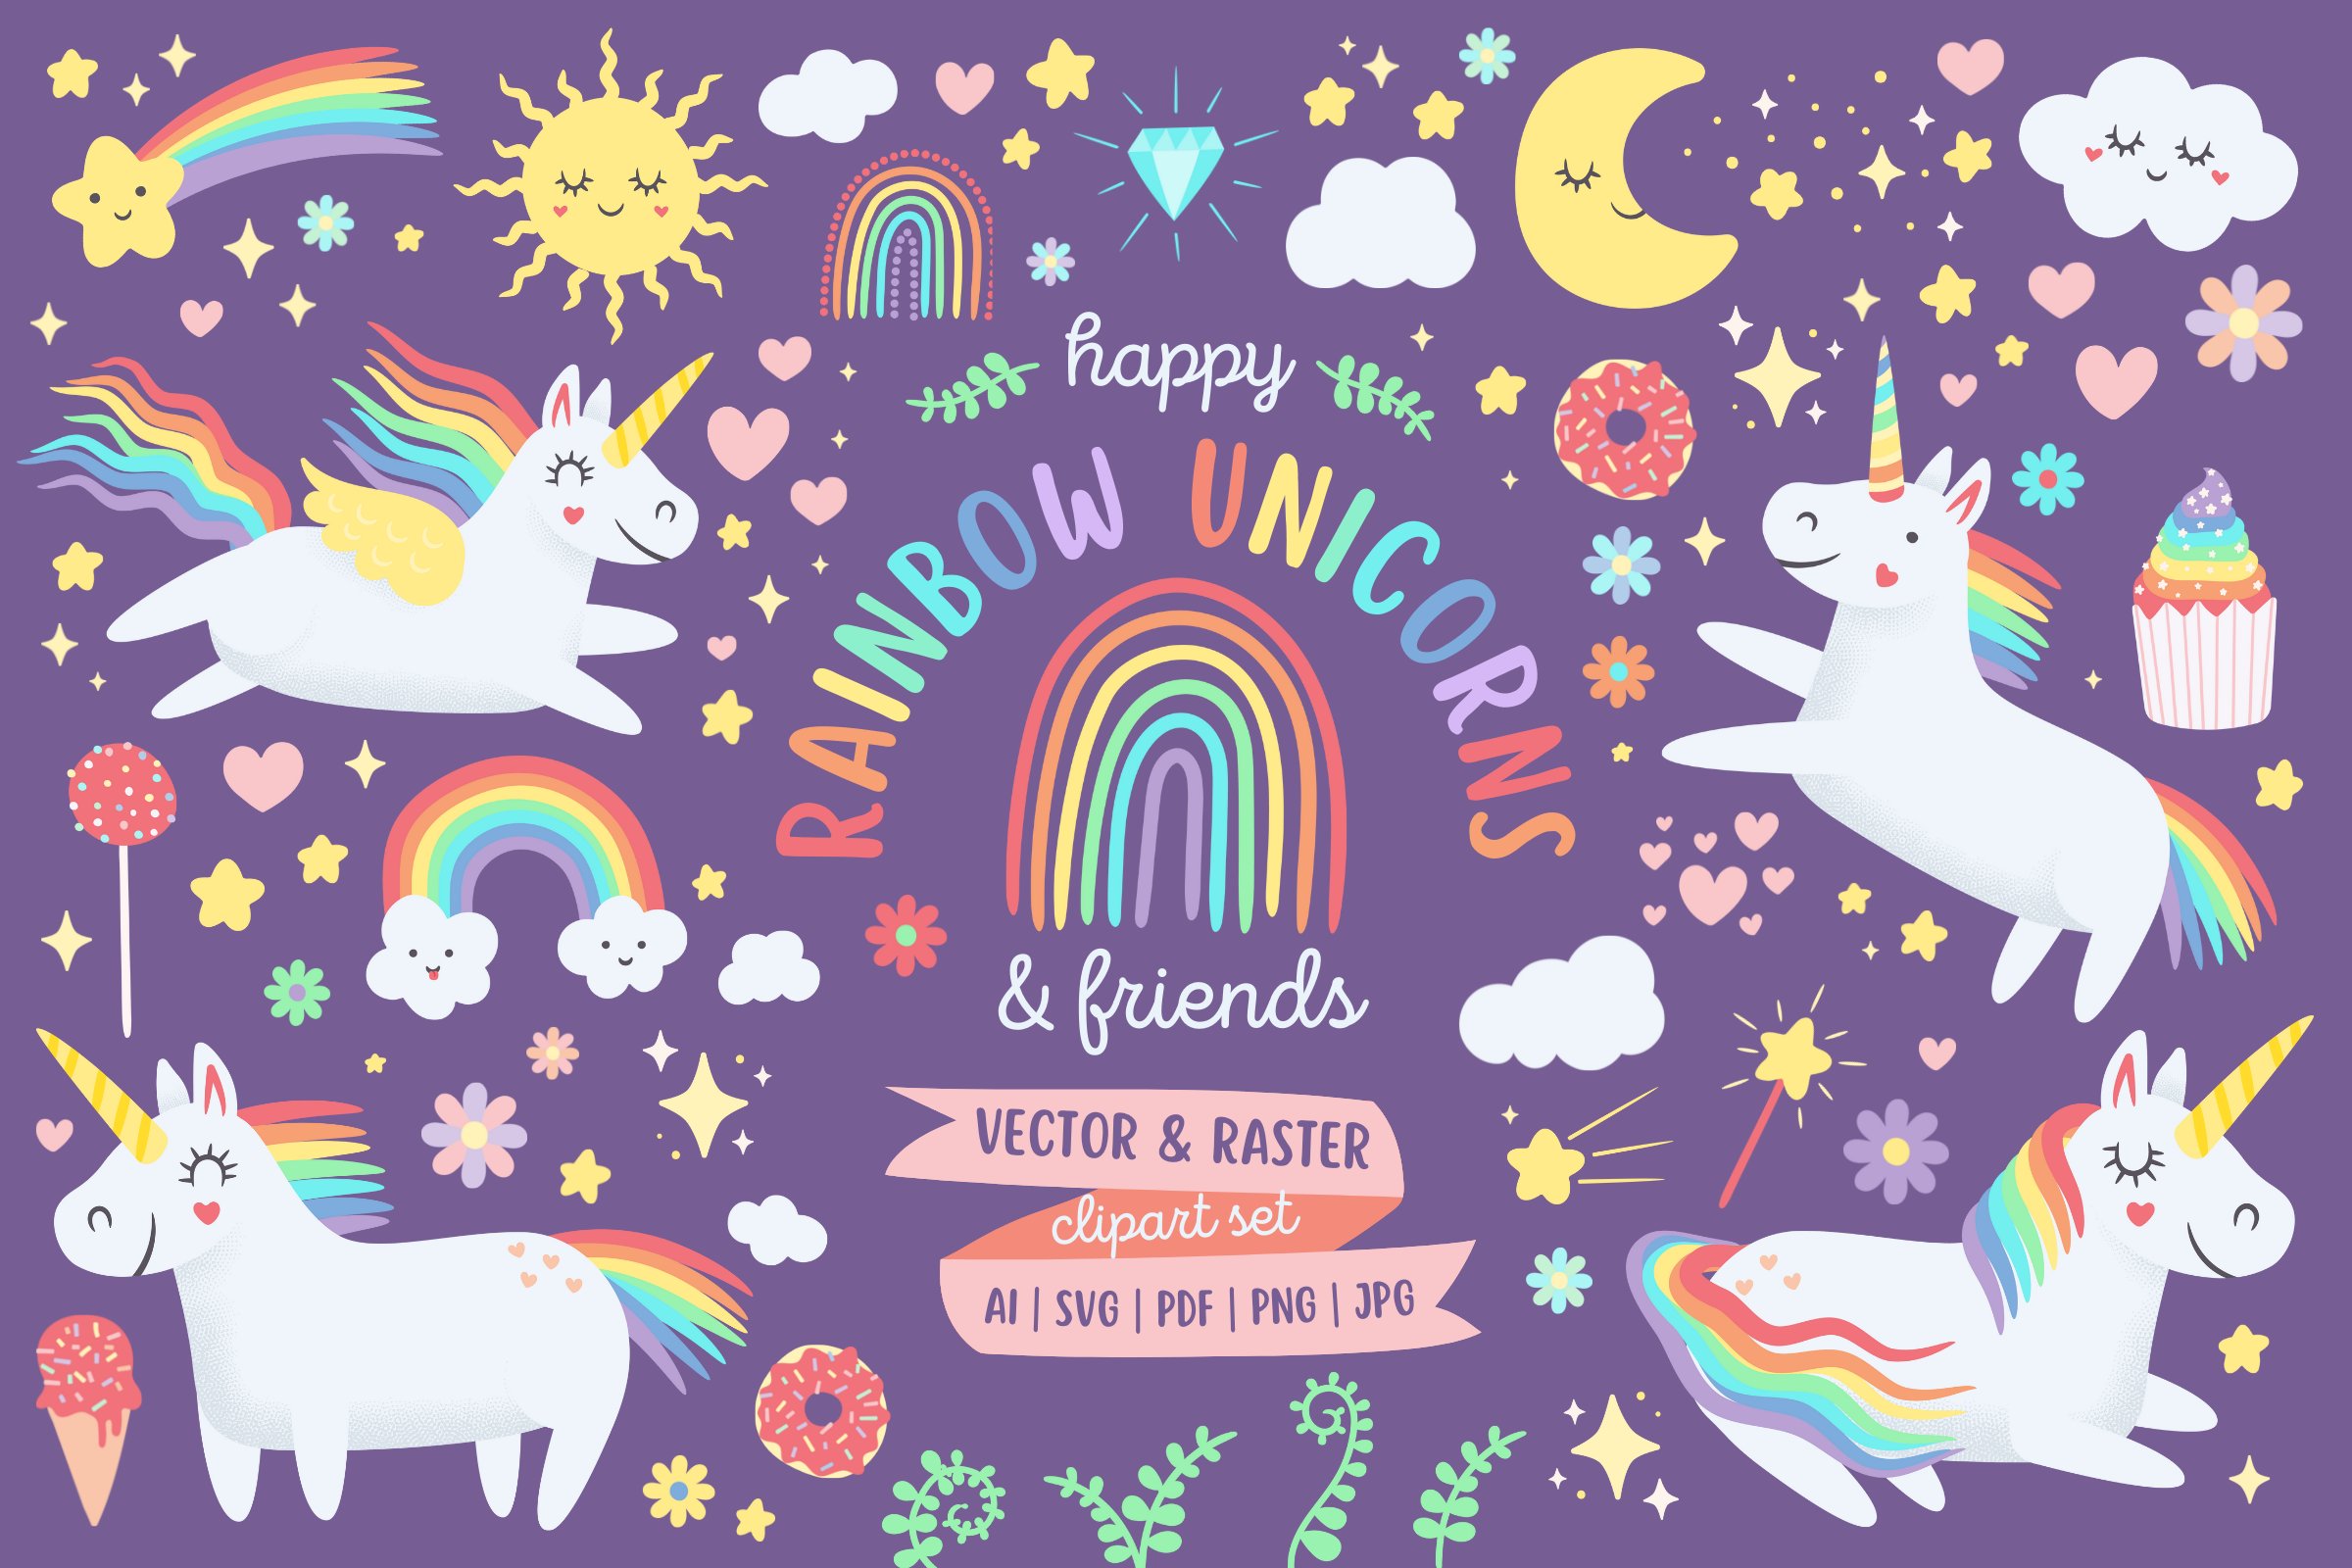 Happy Rainbow Unicorns Clipart Pack cover image.